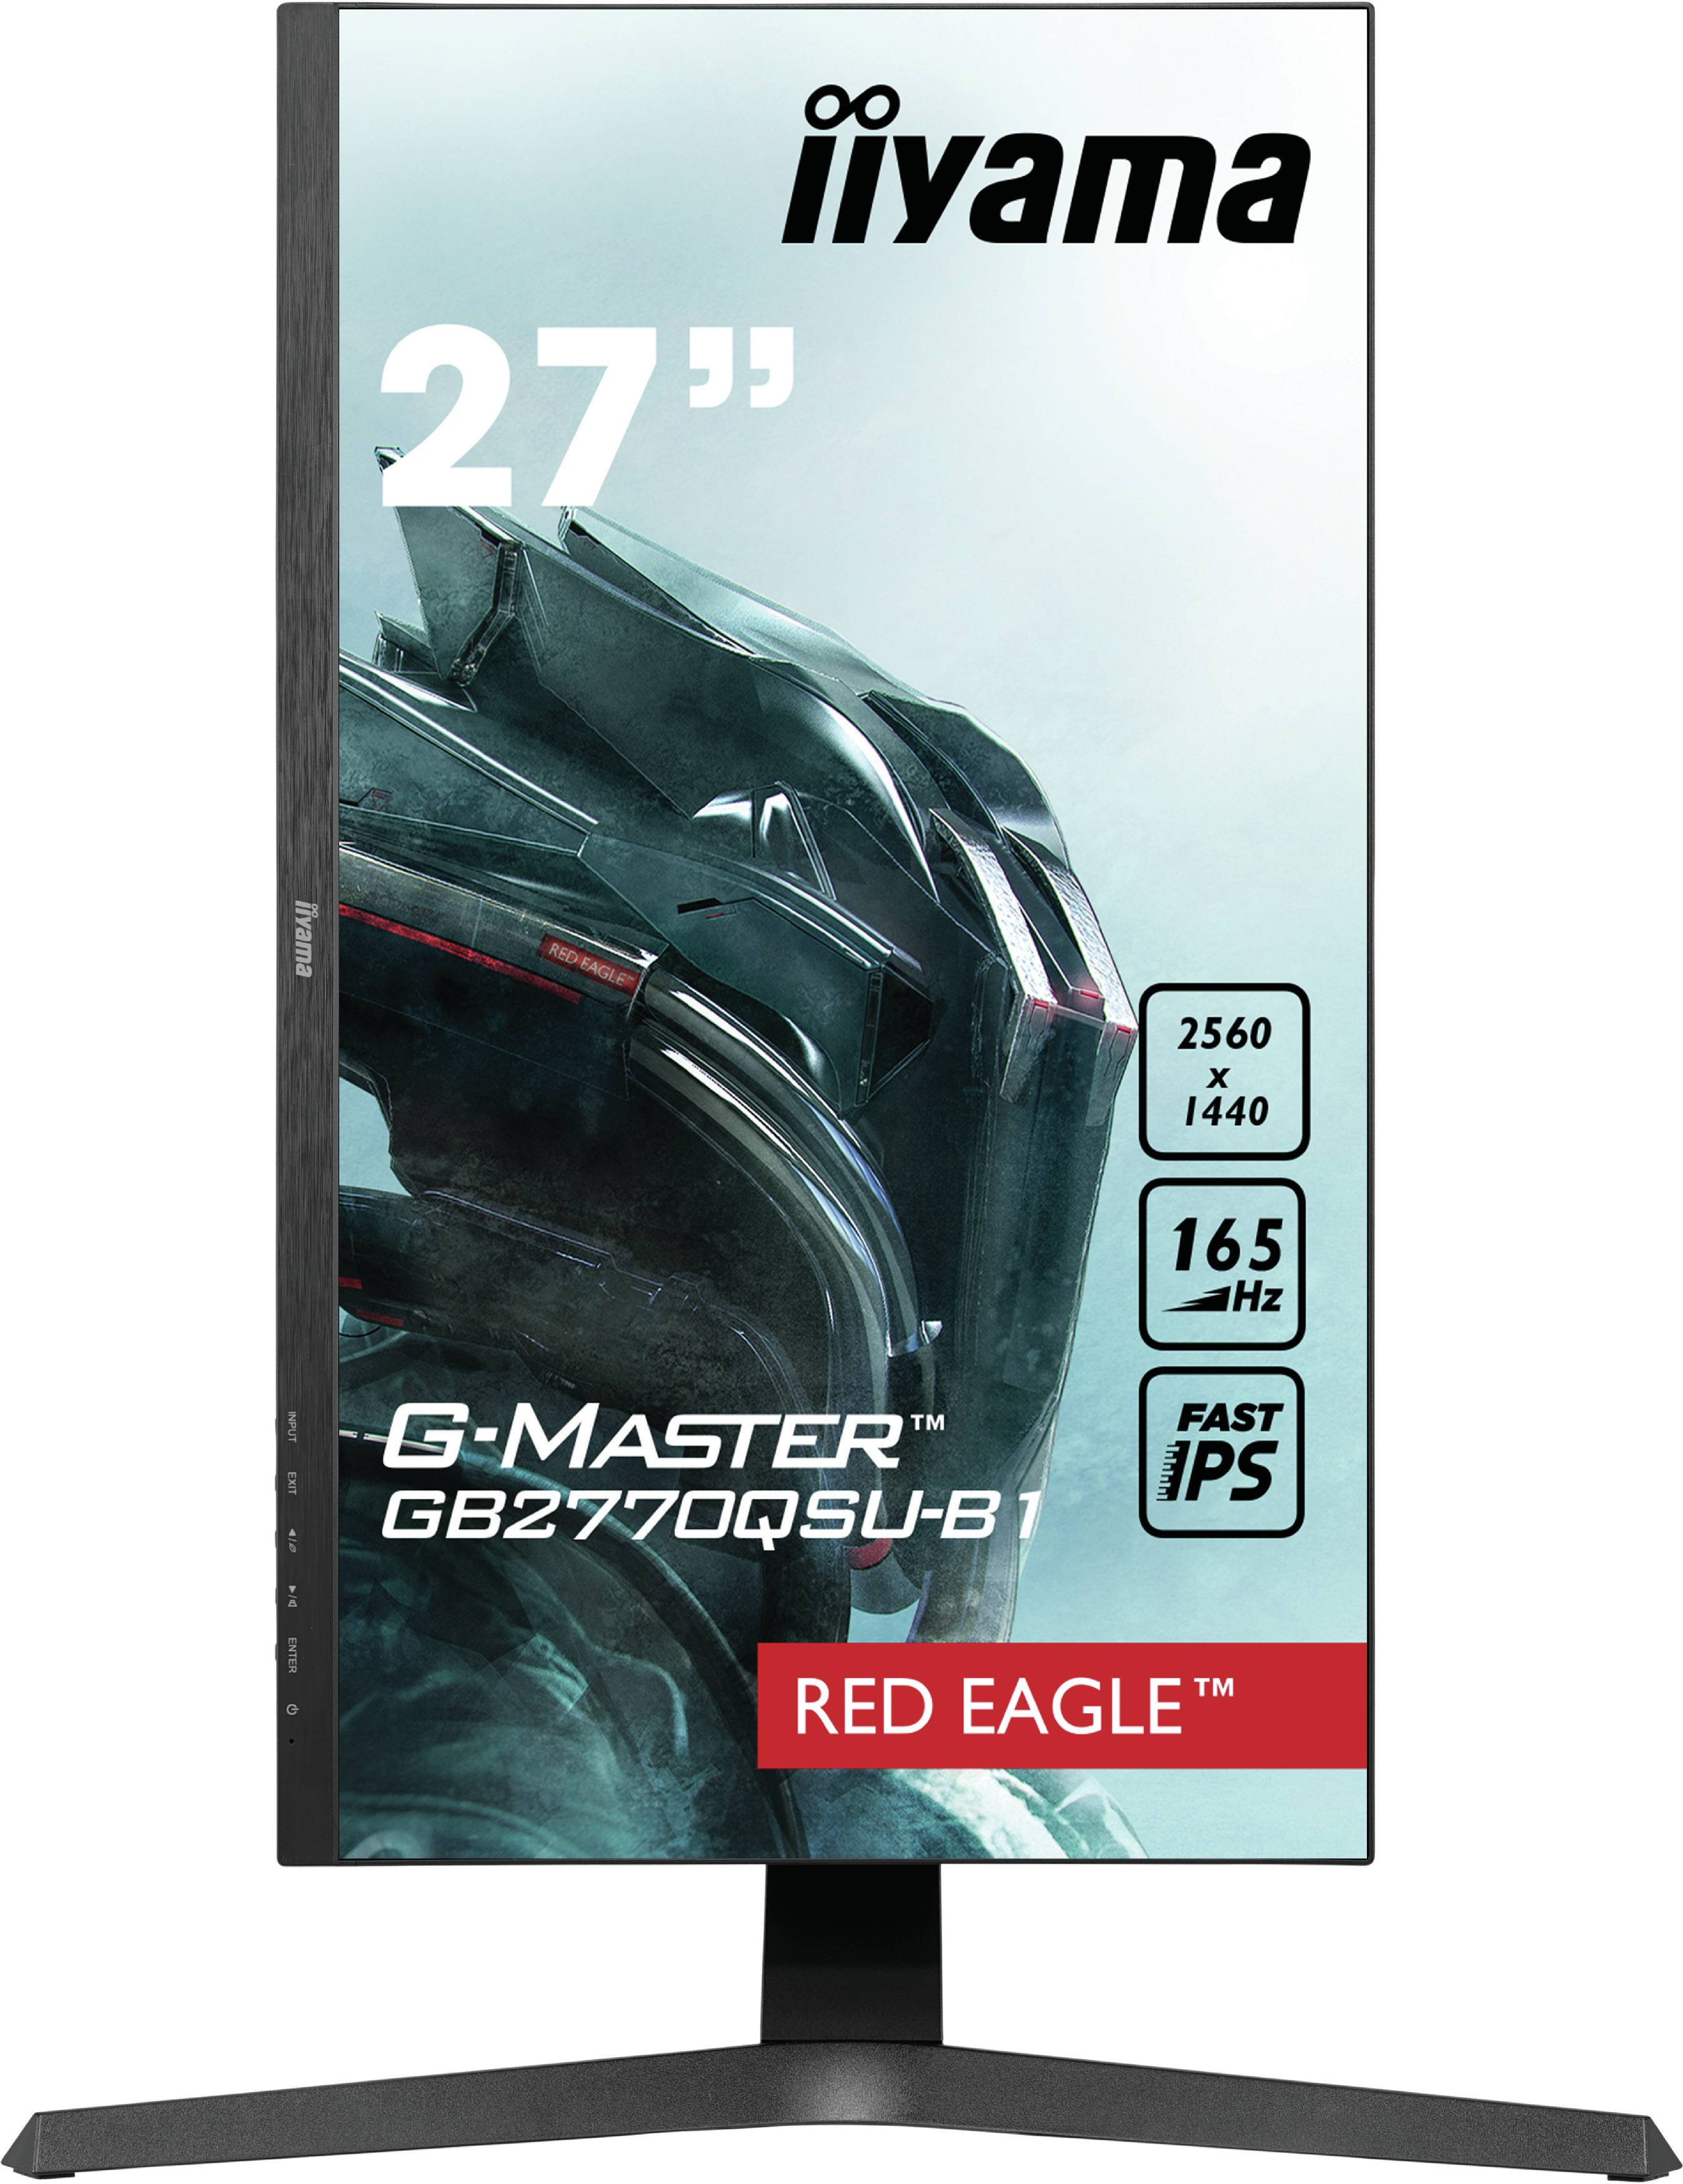 Rca Informatique - image du produit : 27 ETE FAST IPS GAMING G-MASTER RED EAGLE FREESYNC PREMIUM 2560X